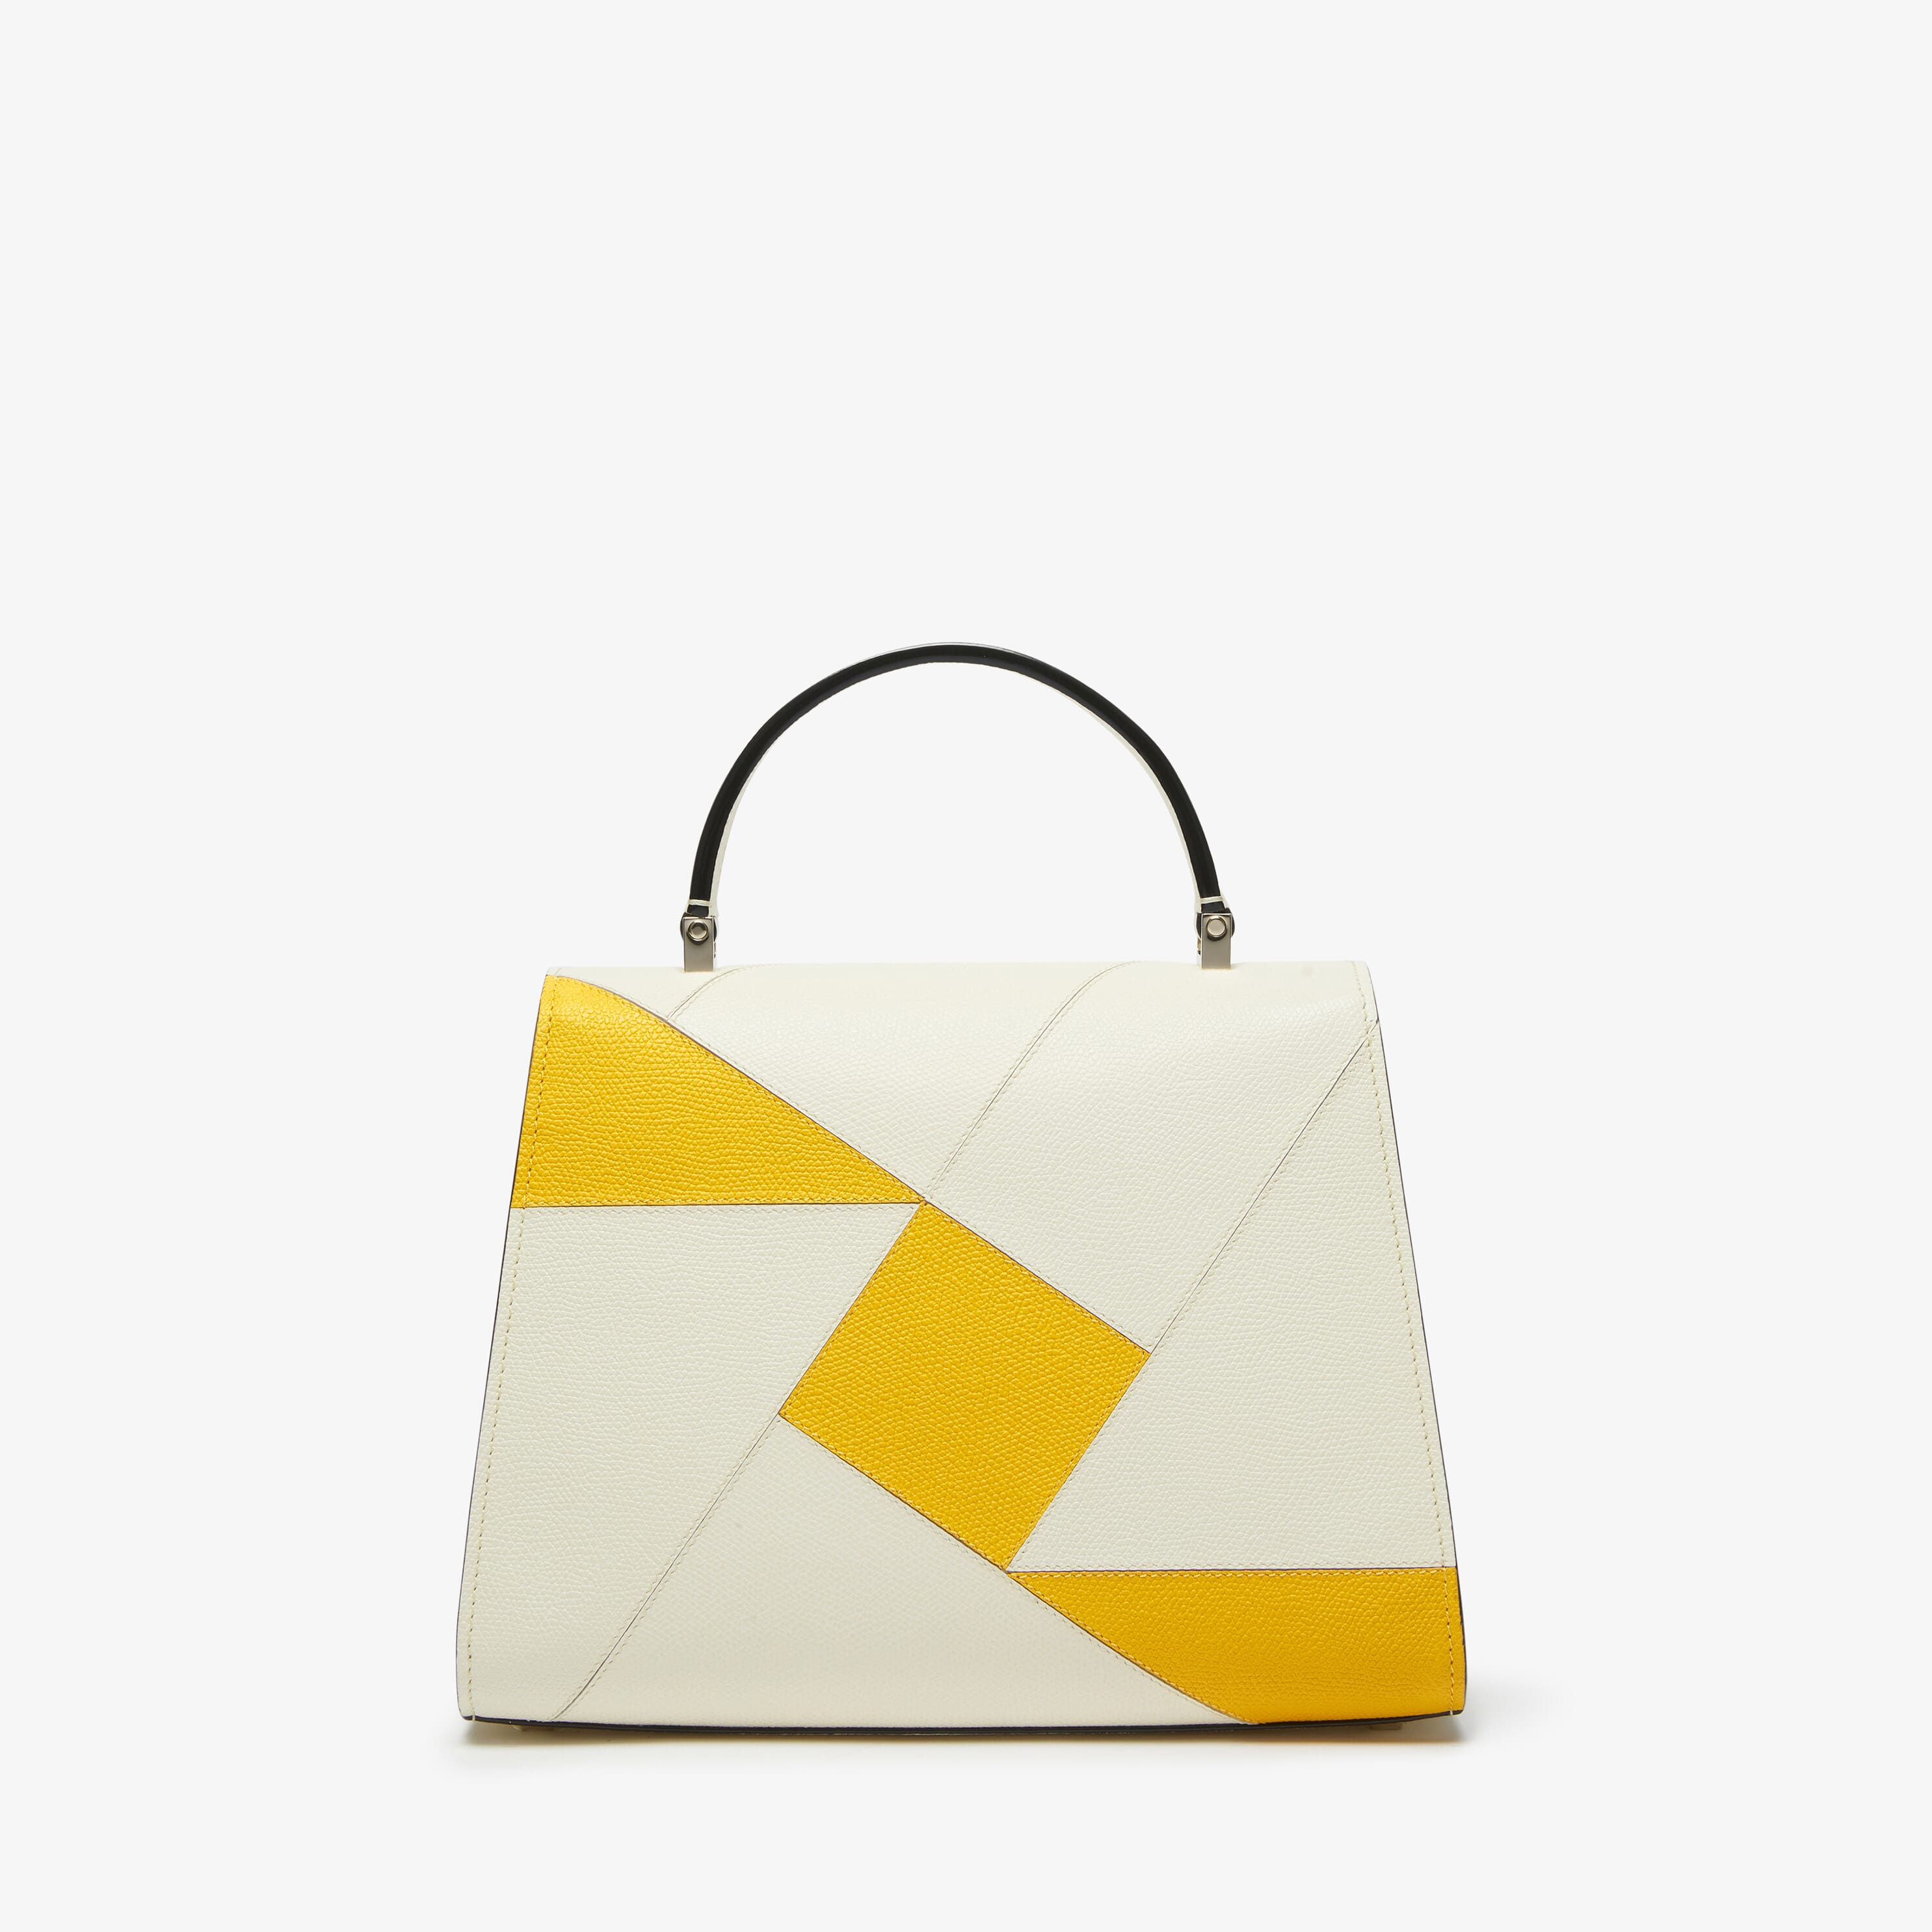 Iside Carousel Top handle Medium bag - Pergamena White/Sun Yellow - Vitello VS-Intarsio Rombo - Valextra - 5